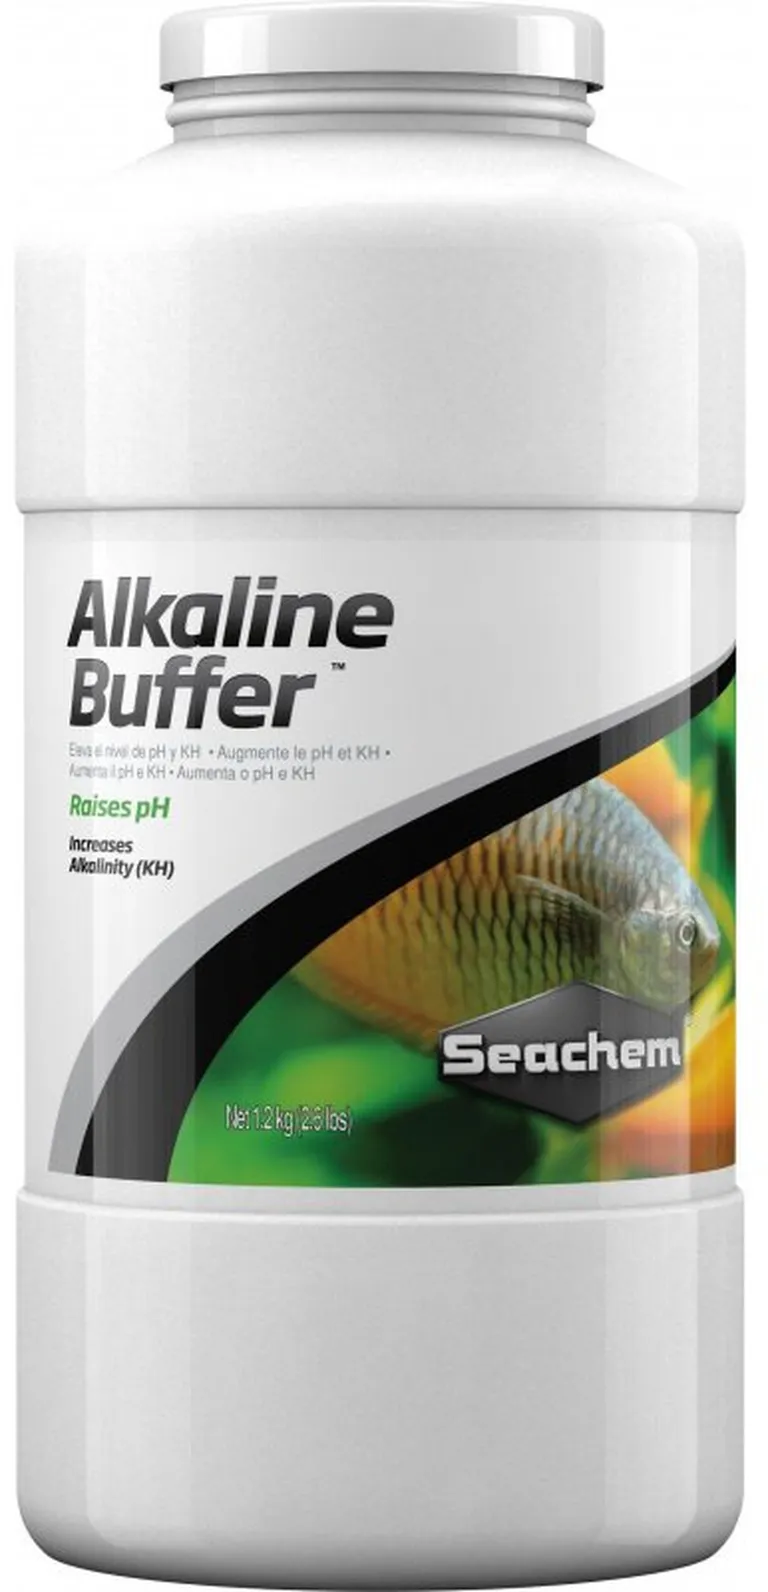 Seachem Alkaline Buffer Raises pH and Increases Alkalinity KH for Aquariums Photo 2